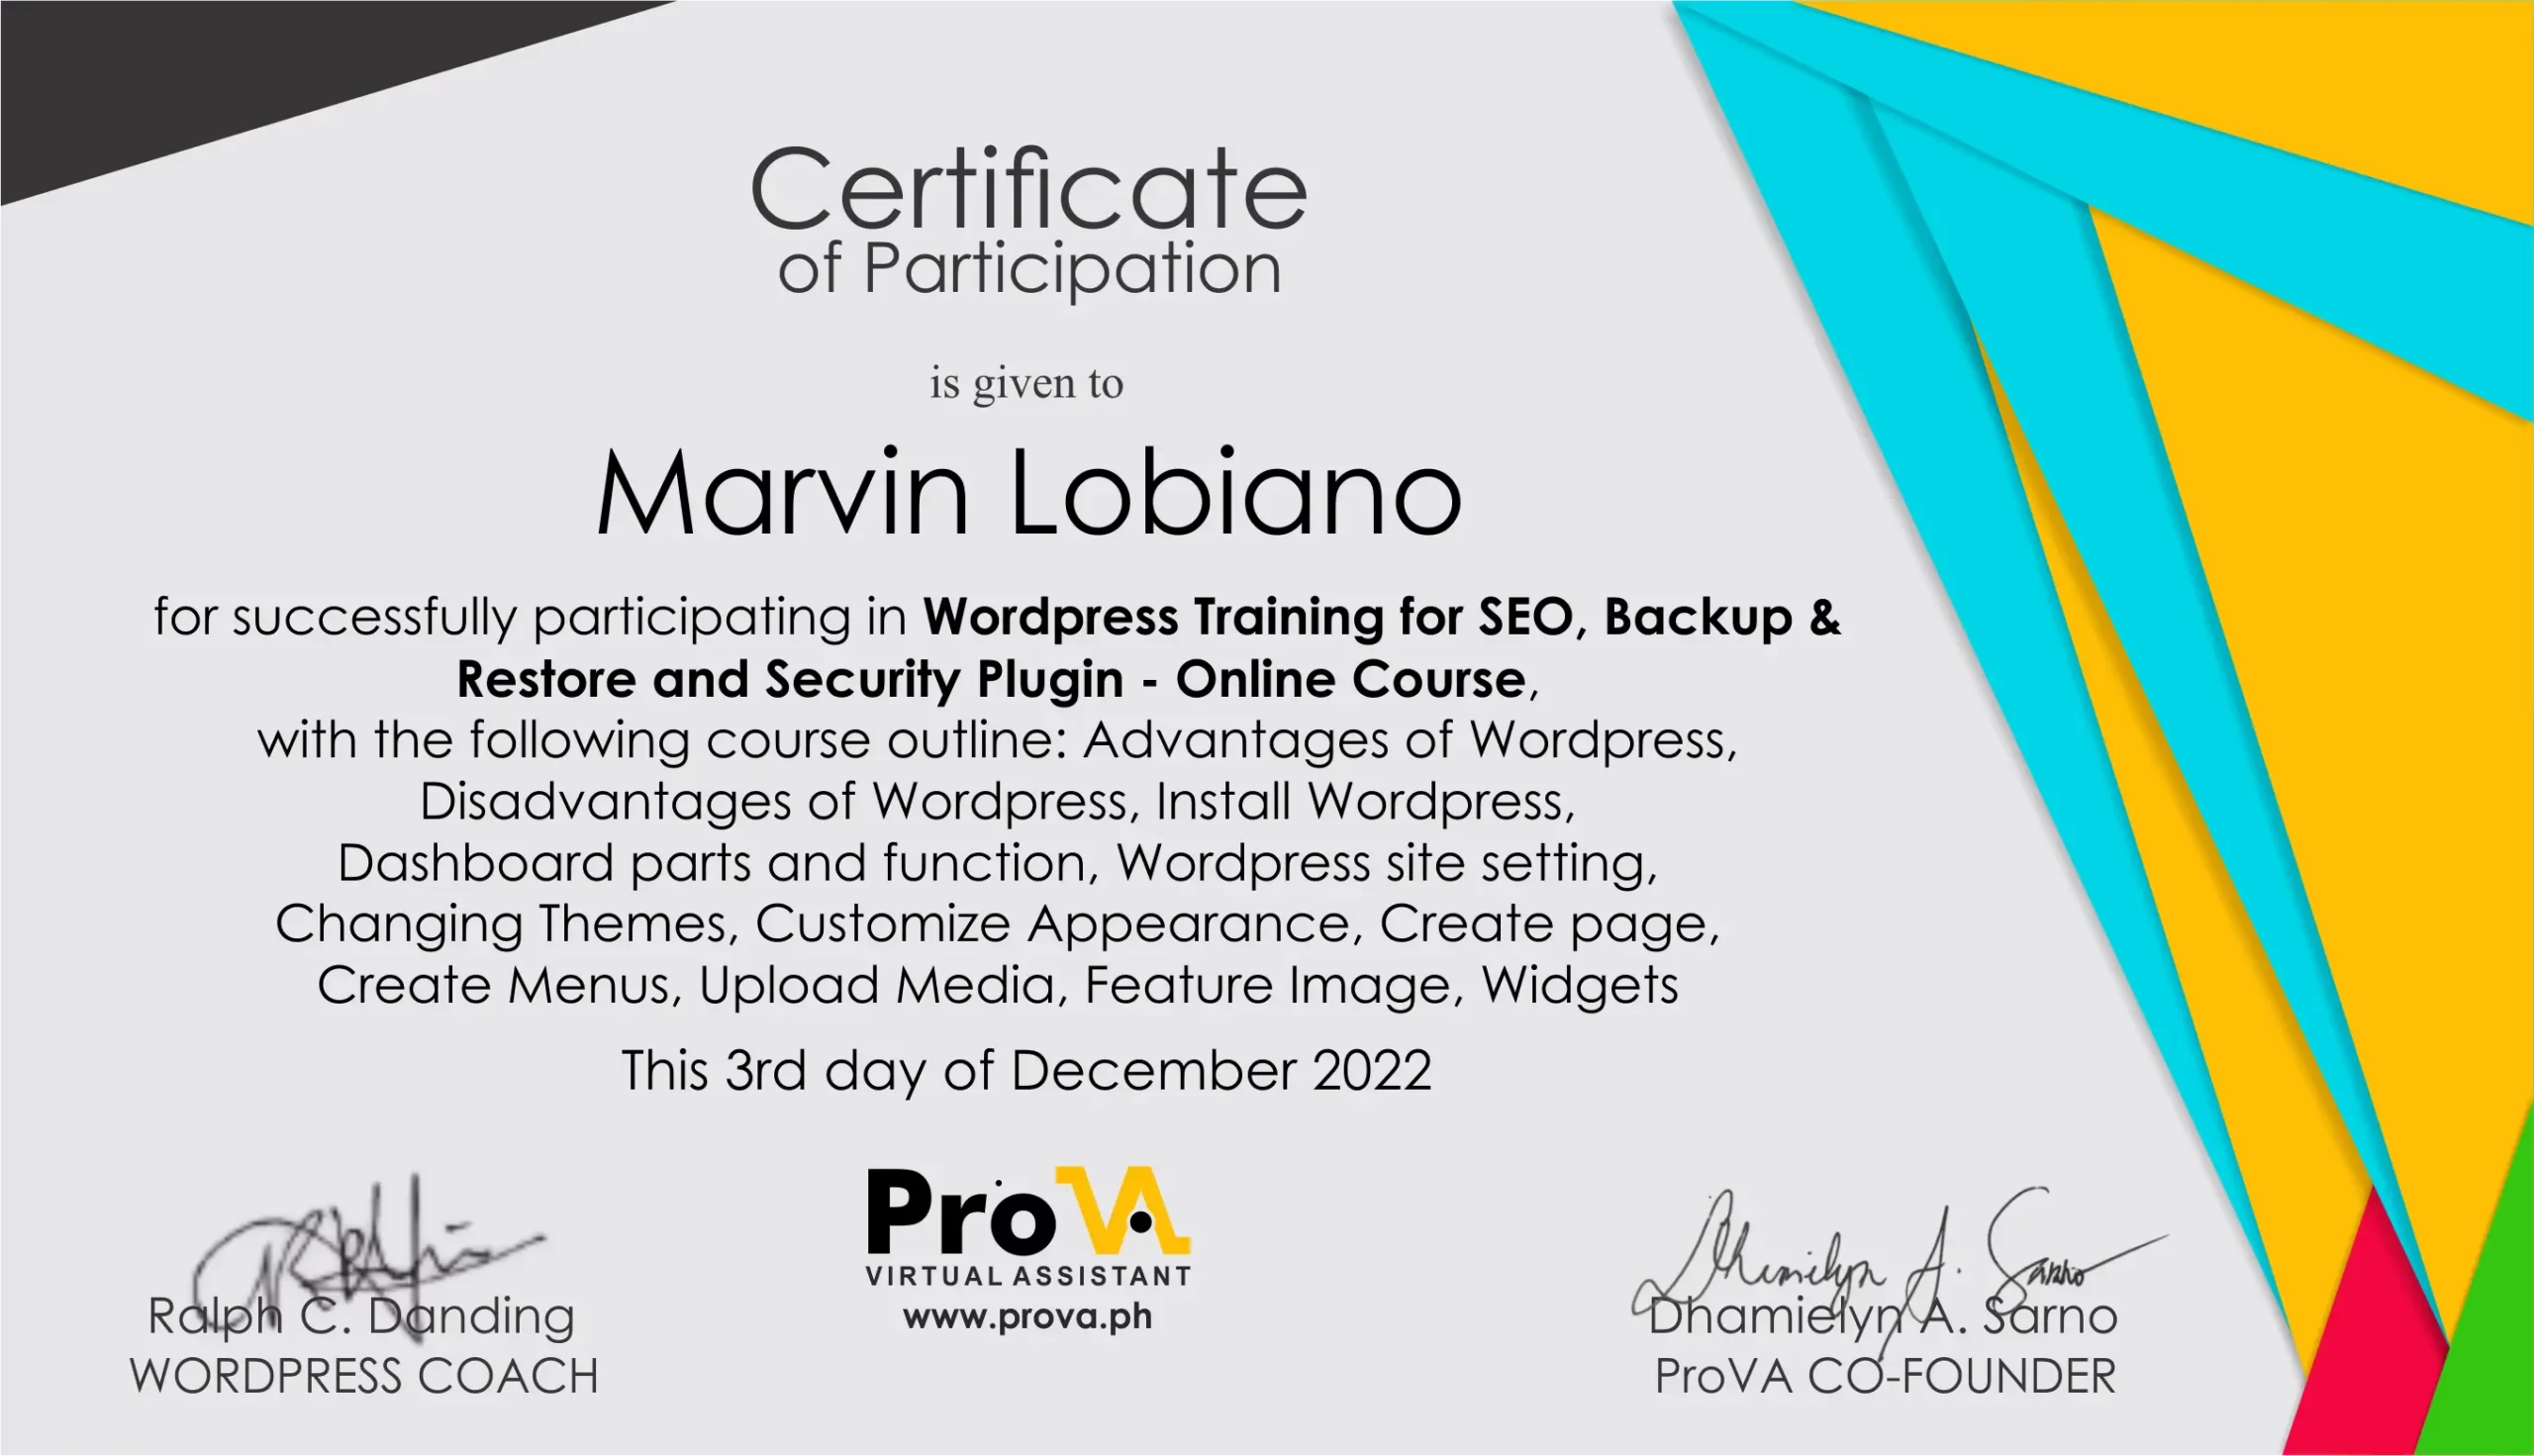 Marvin Lobiano has a WordPress Certificate